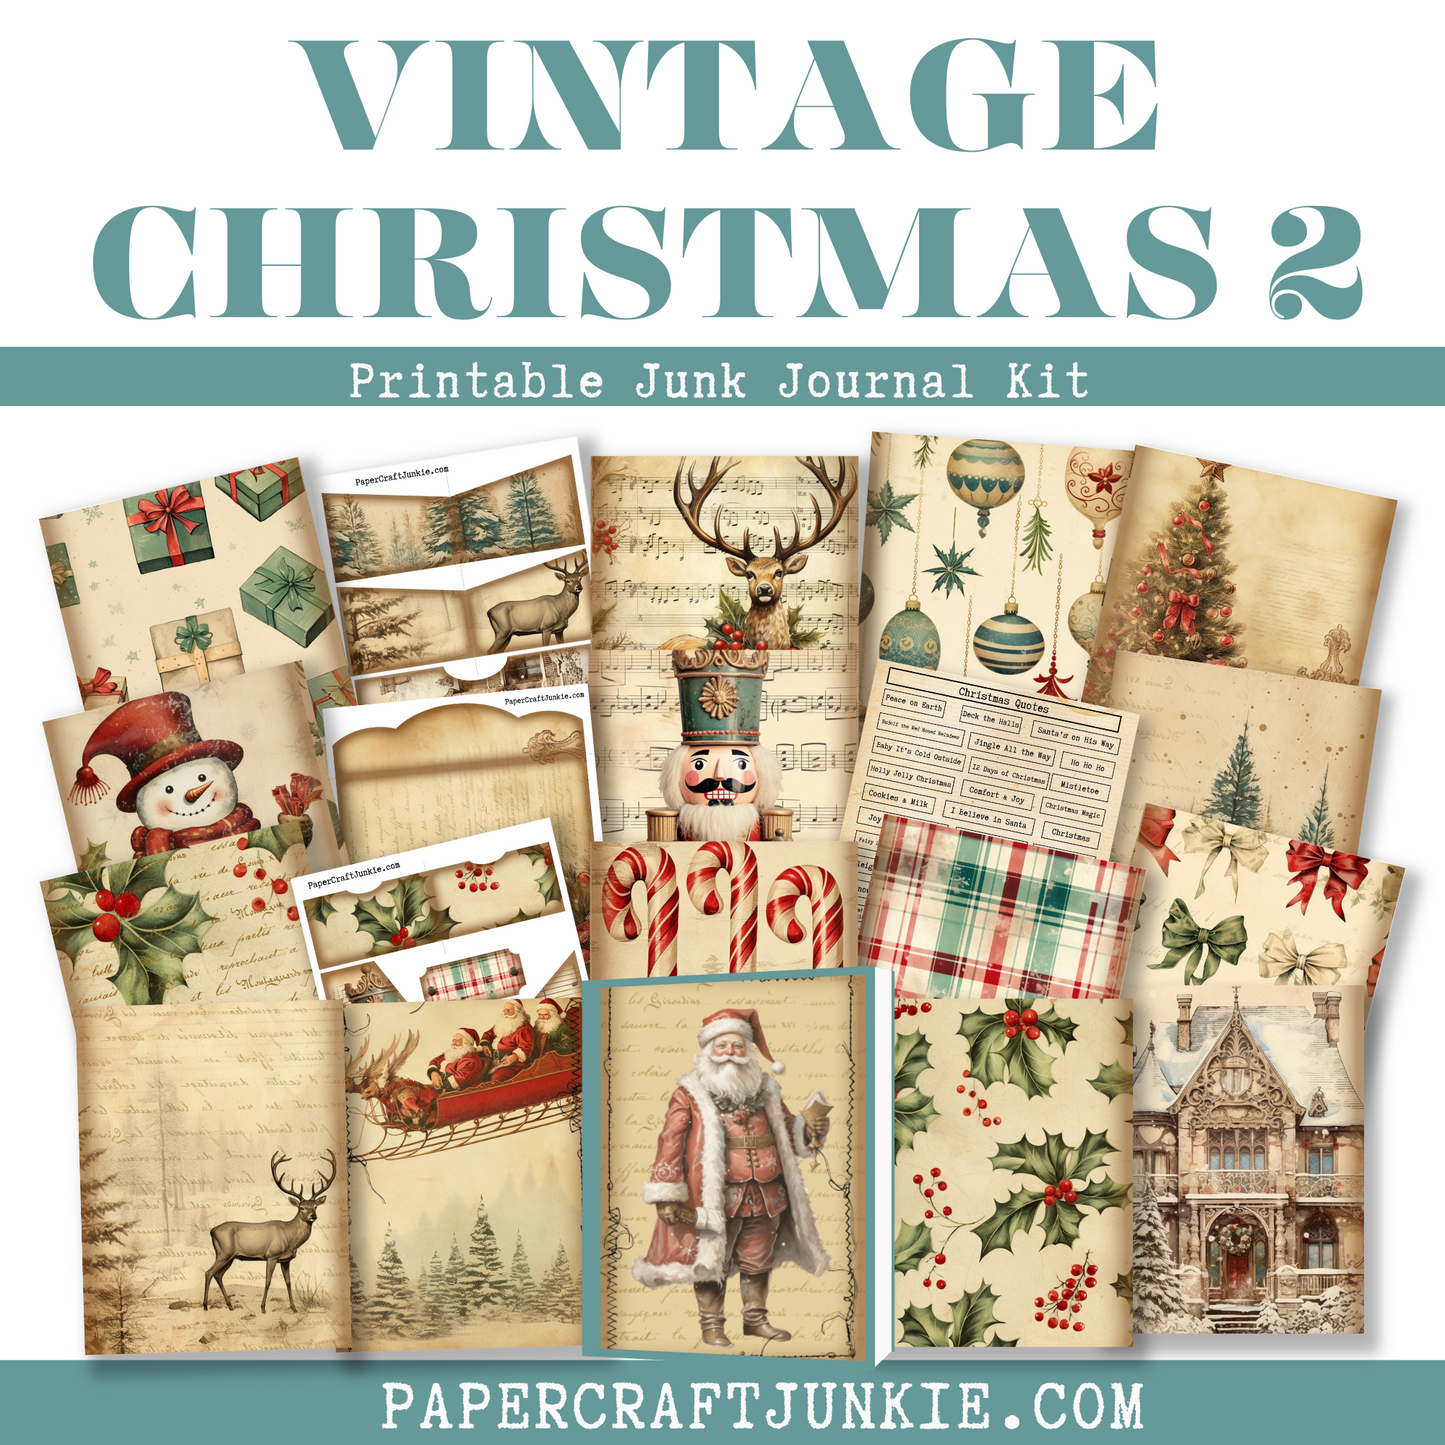 Vintage Christmas 2 Junk Journal Printable Kit - Digital Product